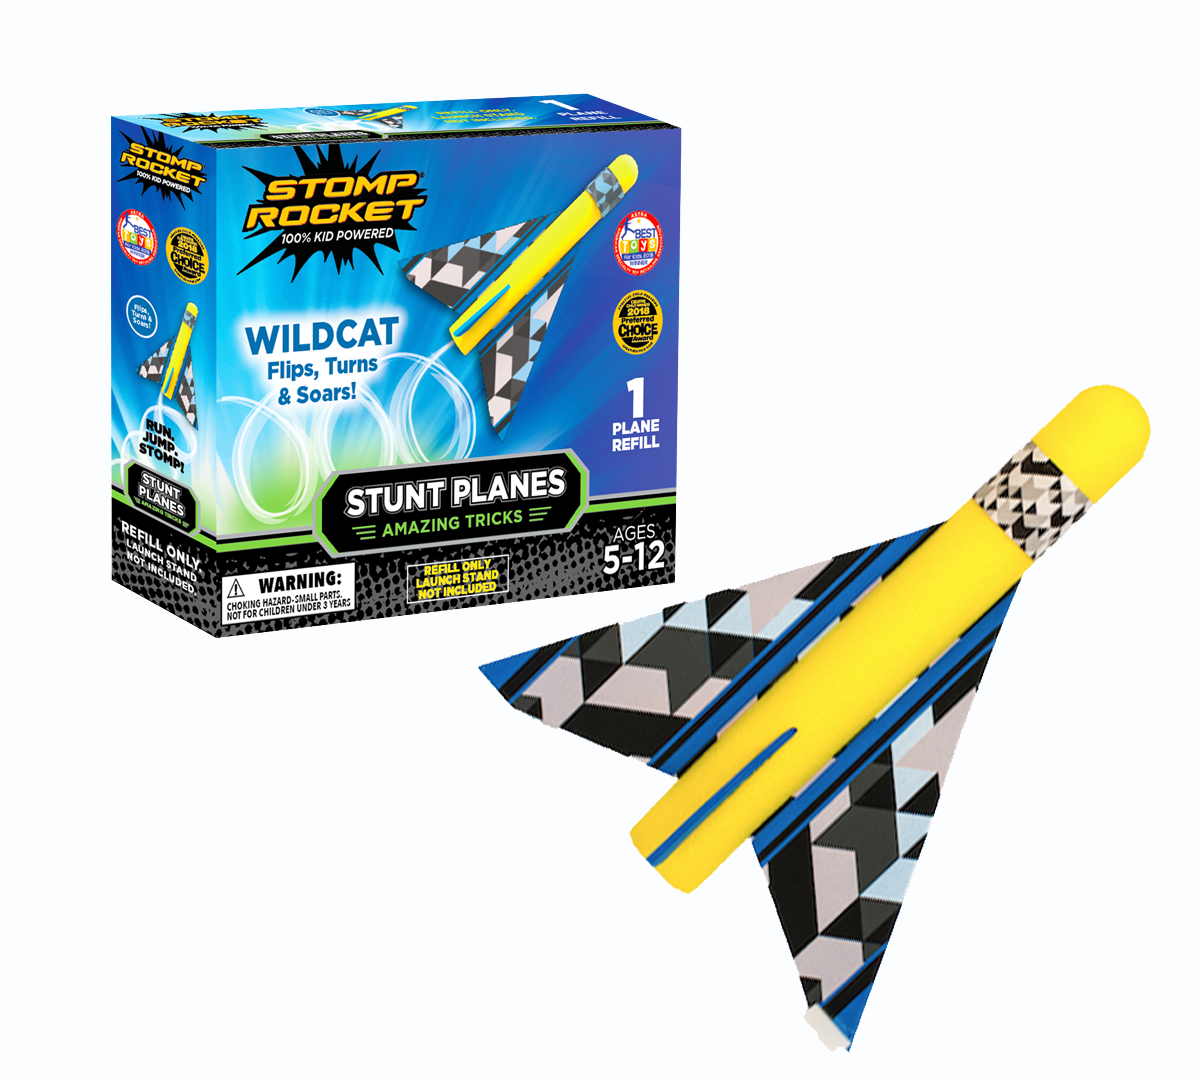 Stomp Rocket Stunt Planes Refill Pack Toys for Boys Girls Wildcat